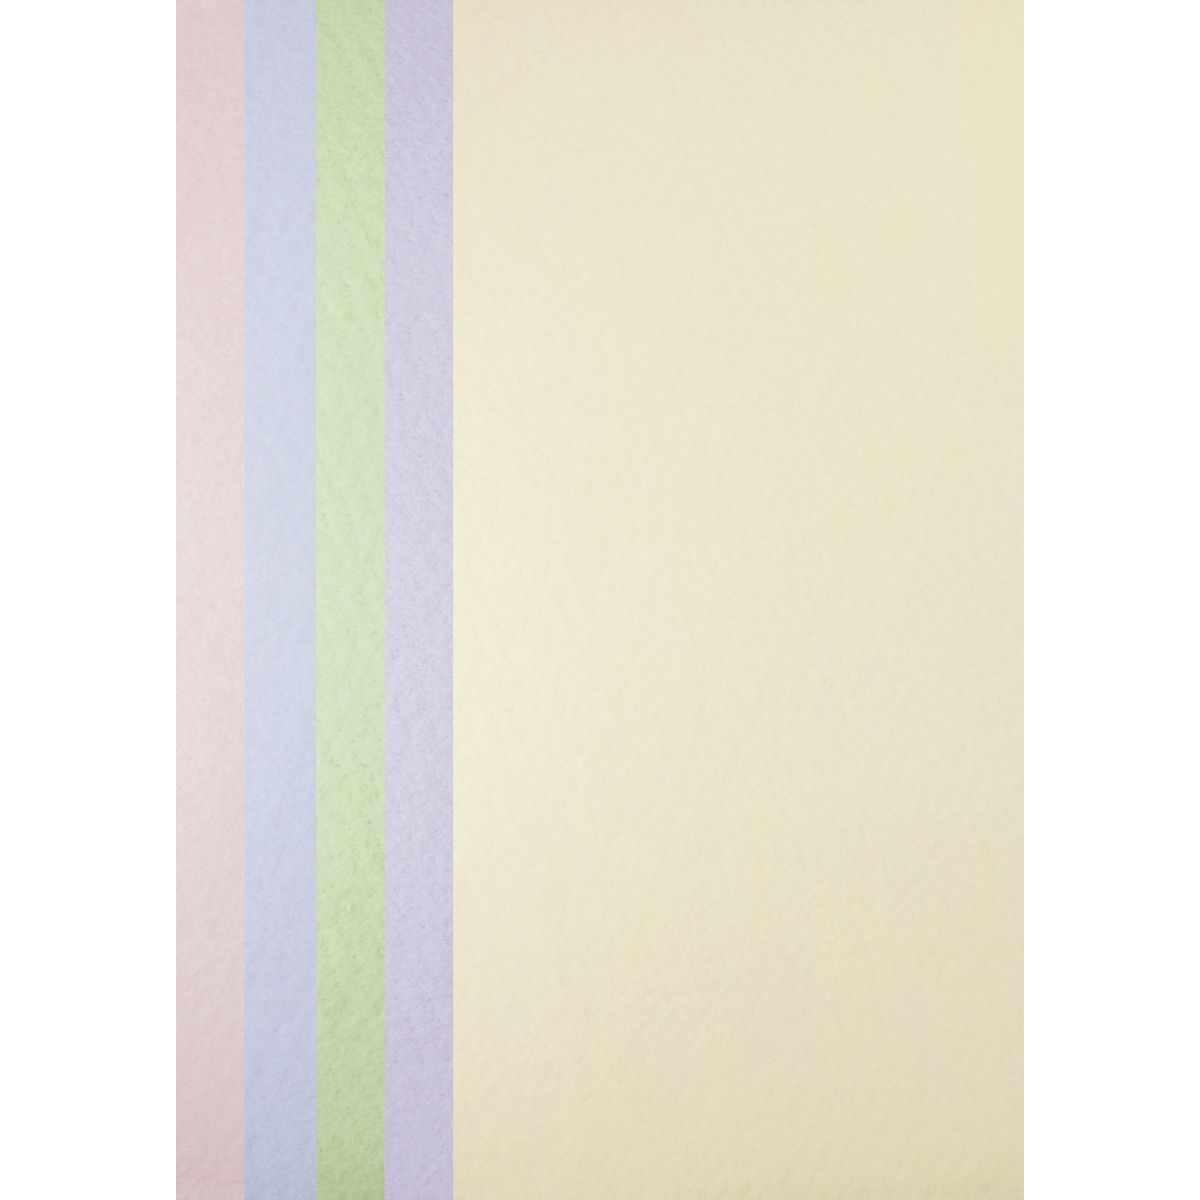 Filc Titanum Craft-Fun Series pastelowy A4 kolor: mix 10 ark. (179901B)